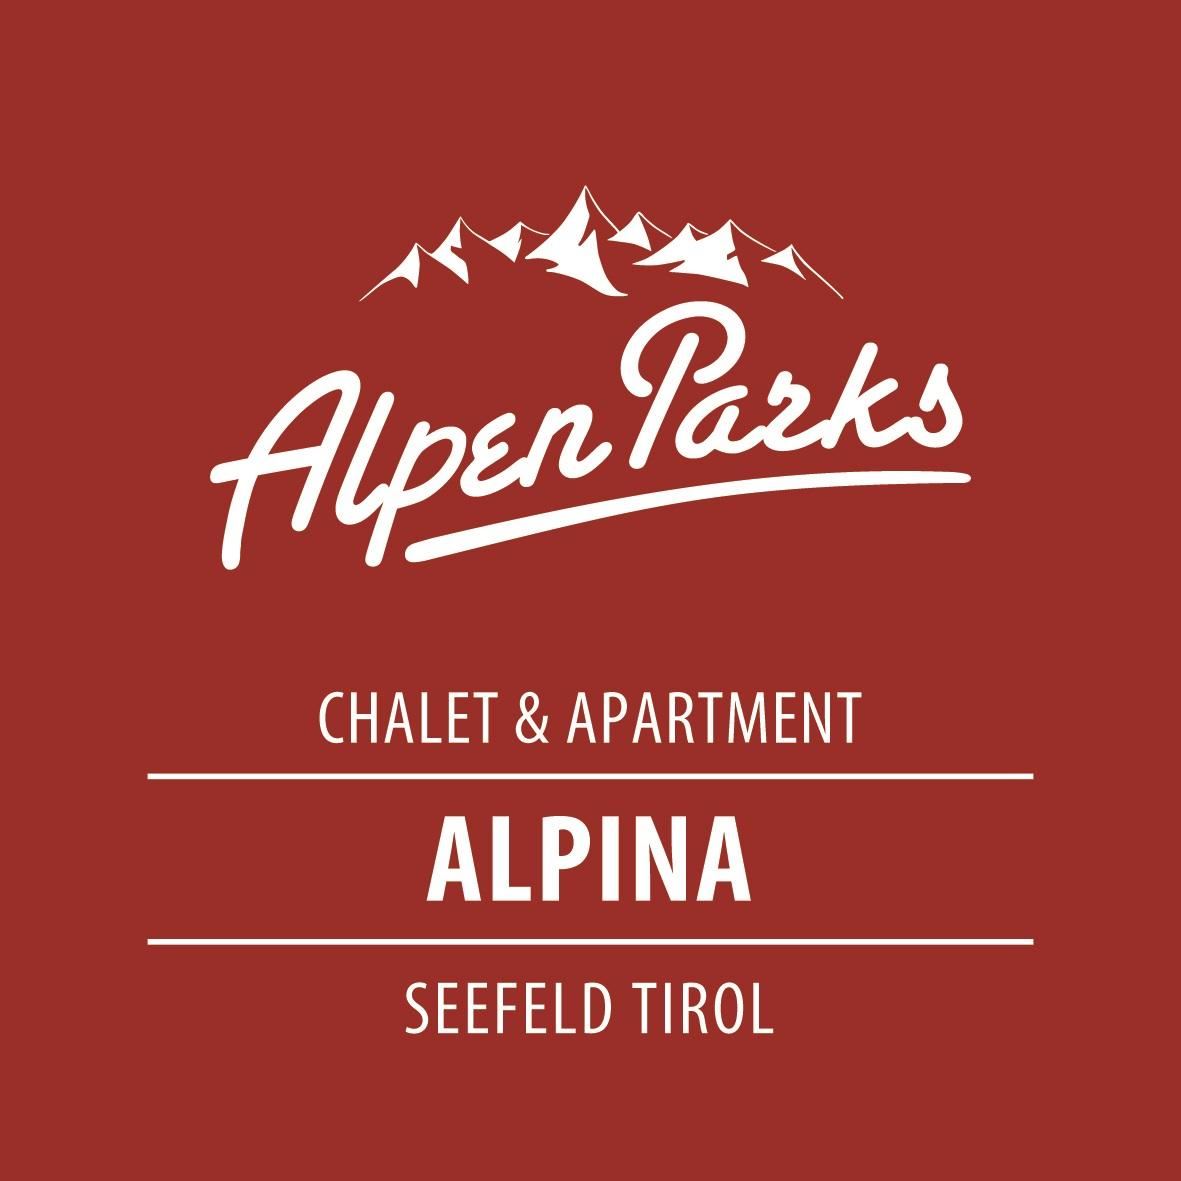 APP_Hotel_Seefeld_Alpina_Chalet_II